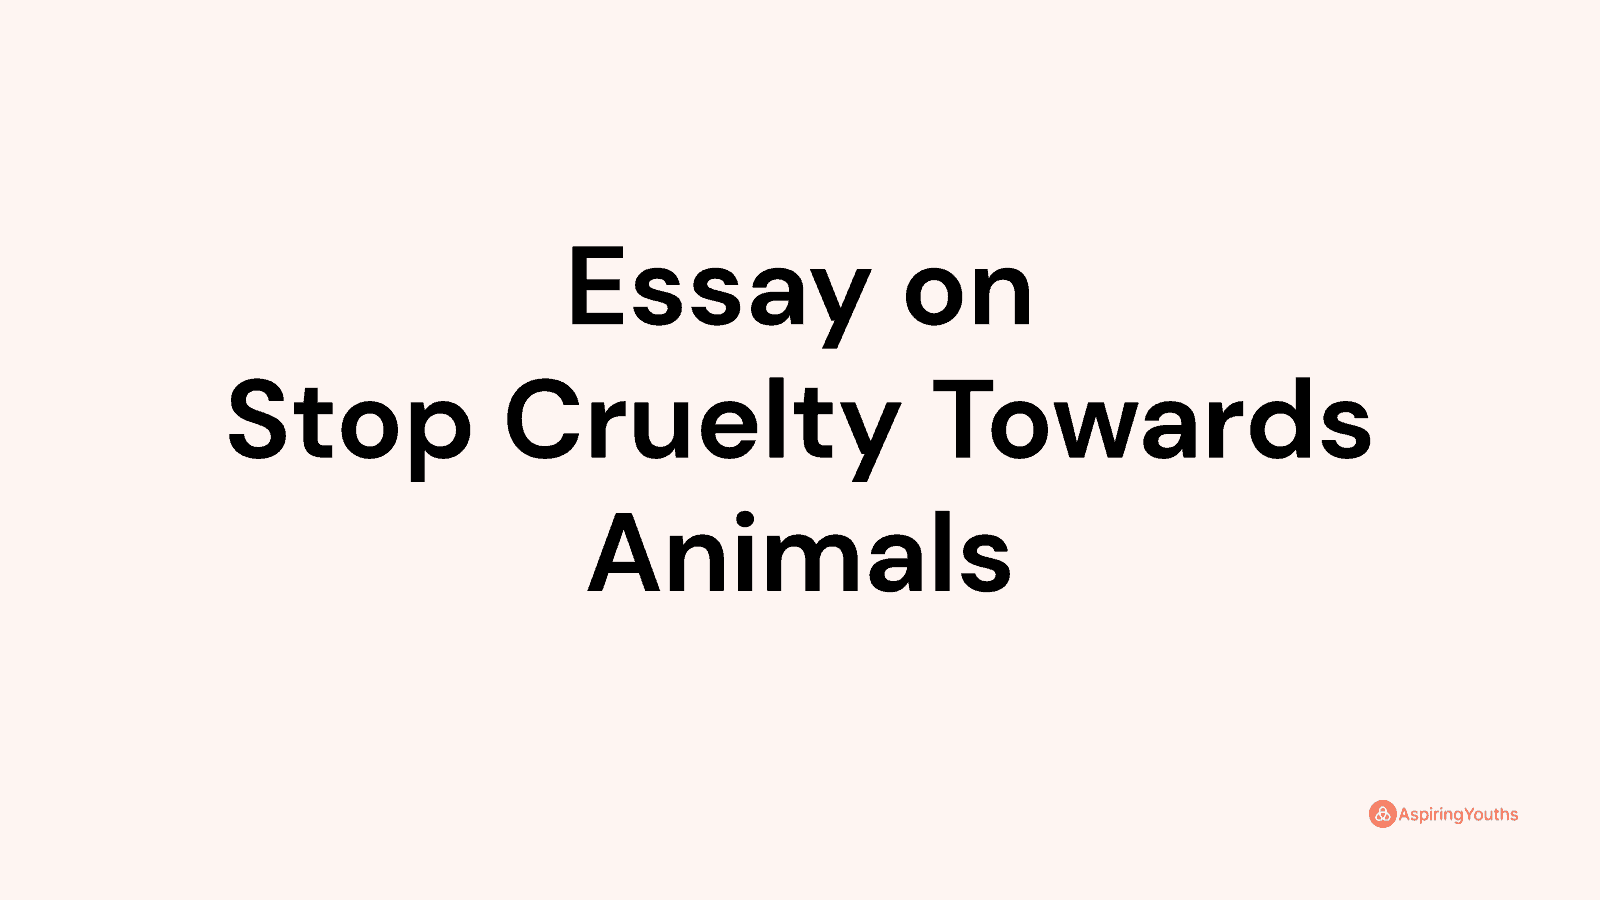 Essay on Stop Cruelty Towards Animals